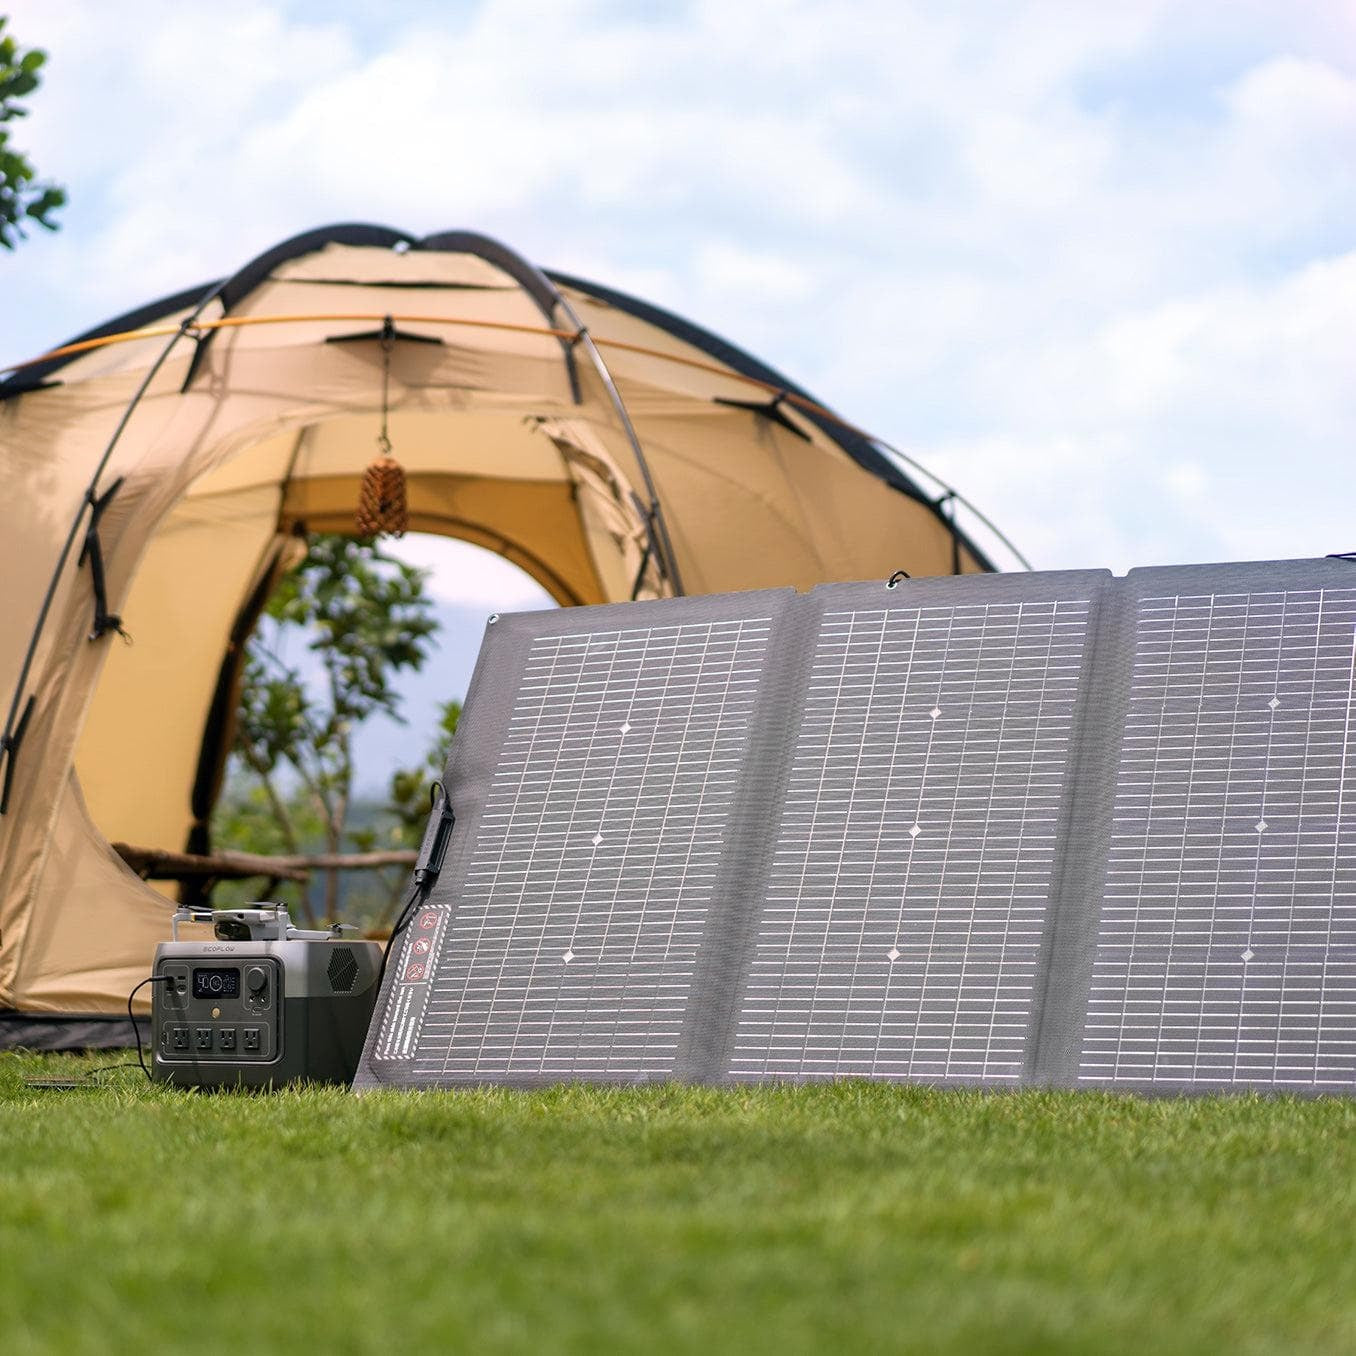 EcoFlow RIVER 2 Pro + 1*220W Portable Solar Panel Energy Bundle.